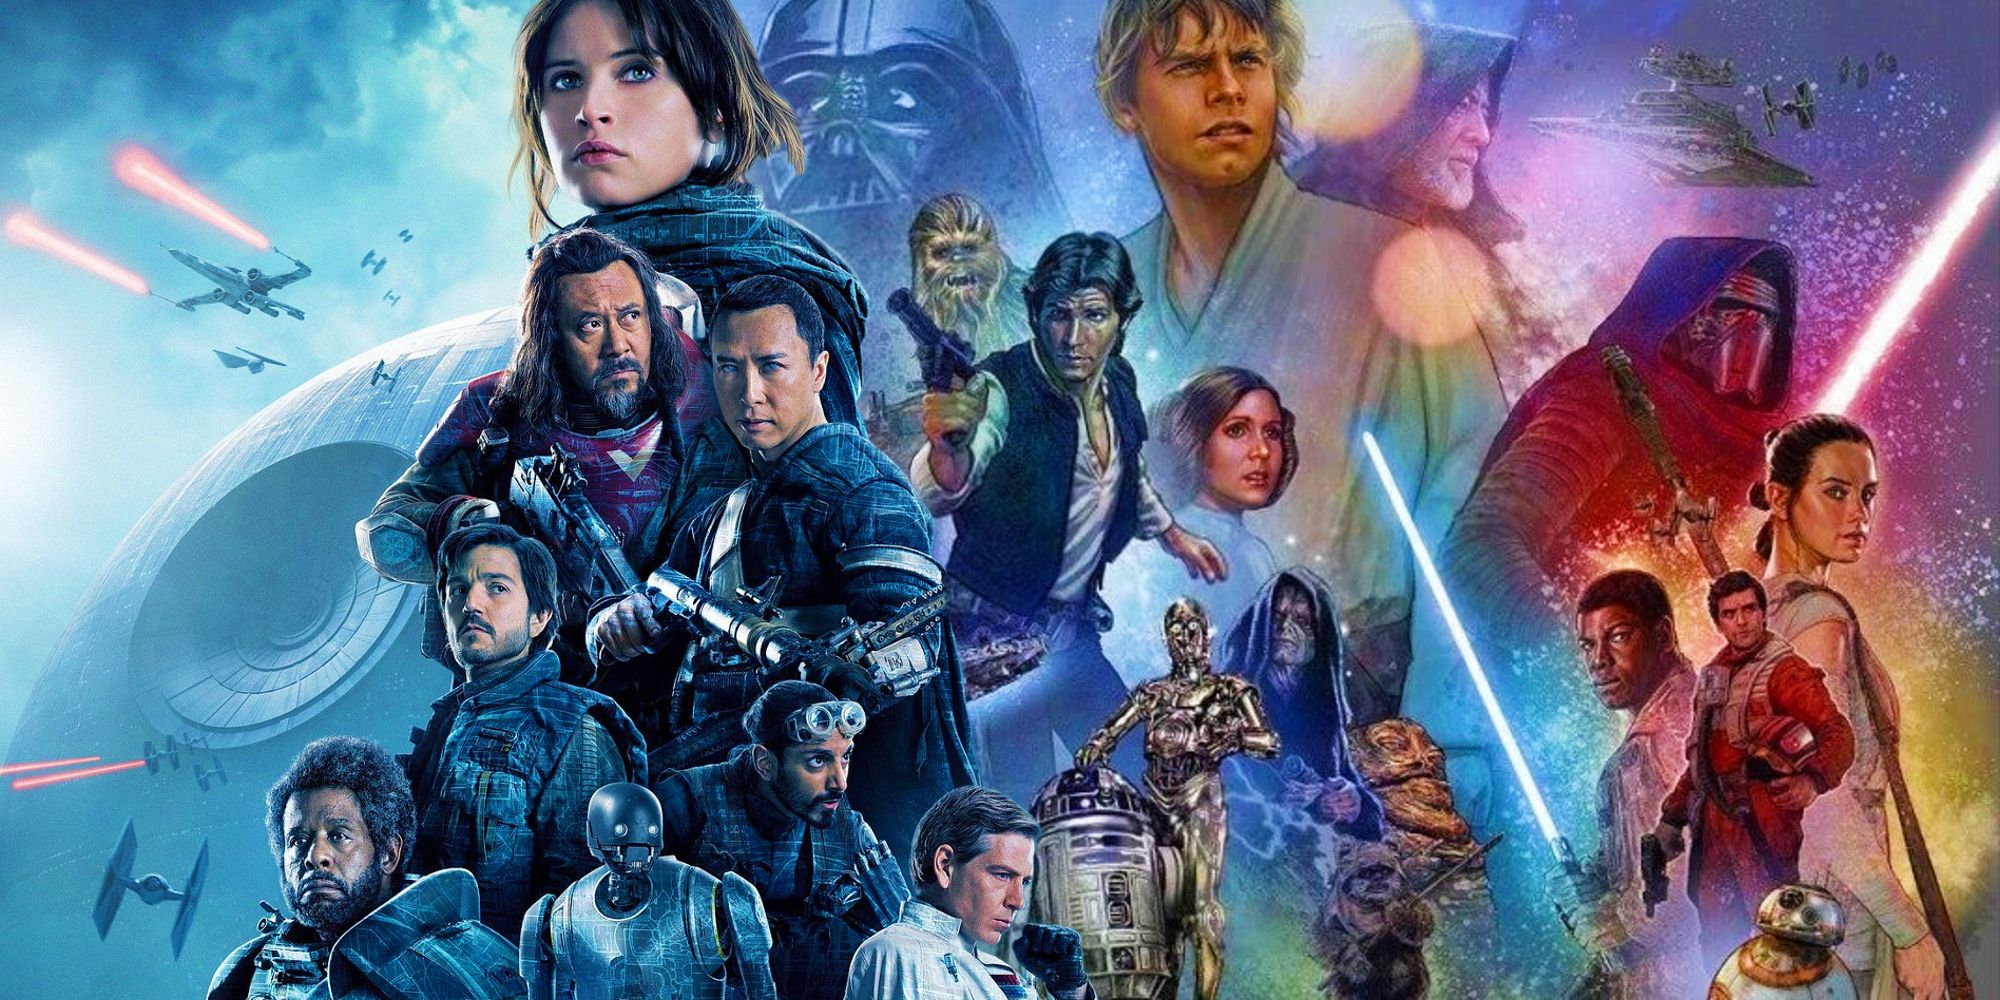 Rogue One's poster next to a mural of Star Wars' Skywalker Saga